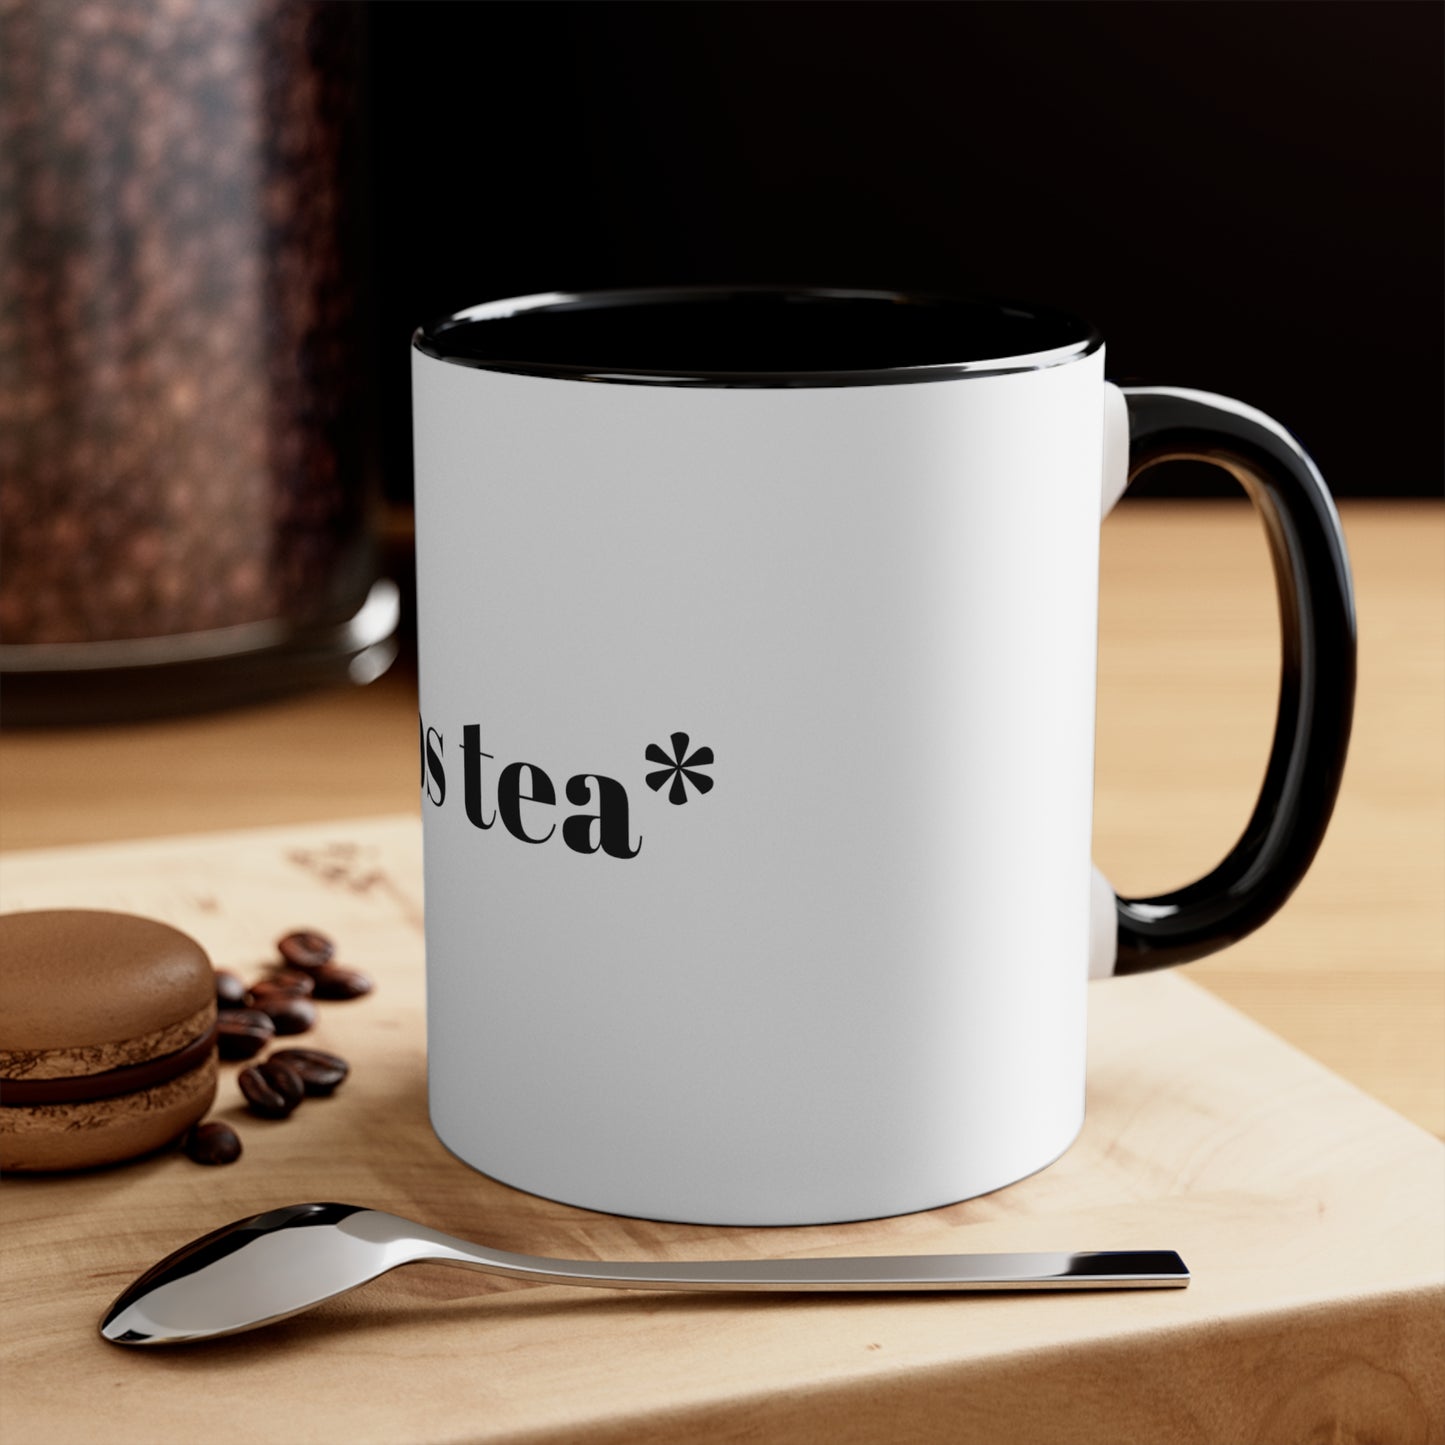 Sip Happens Collection- Sips Tea Accent Coffee Mug, 11oz